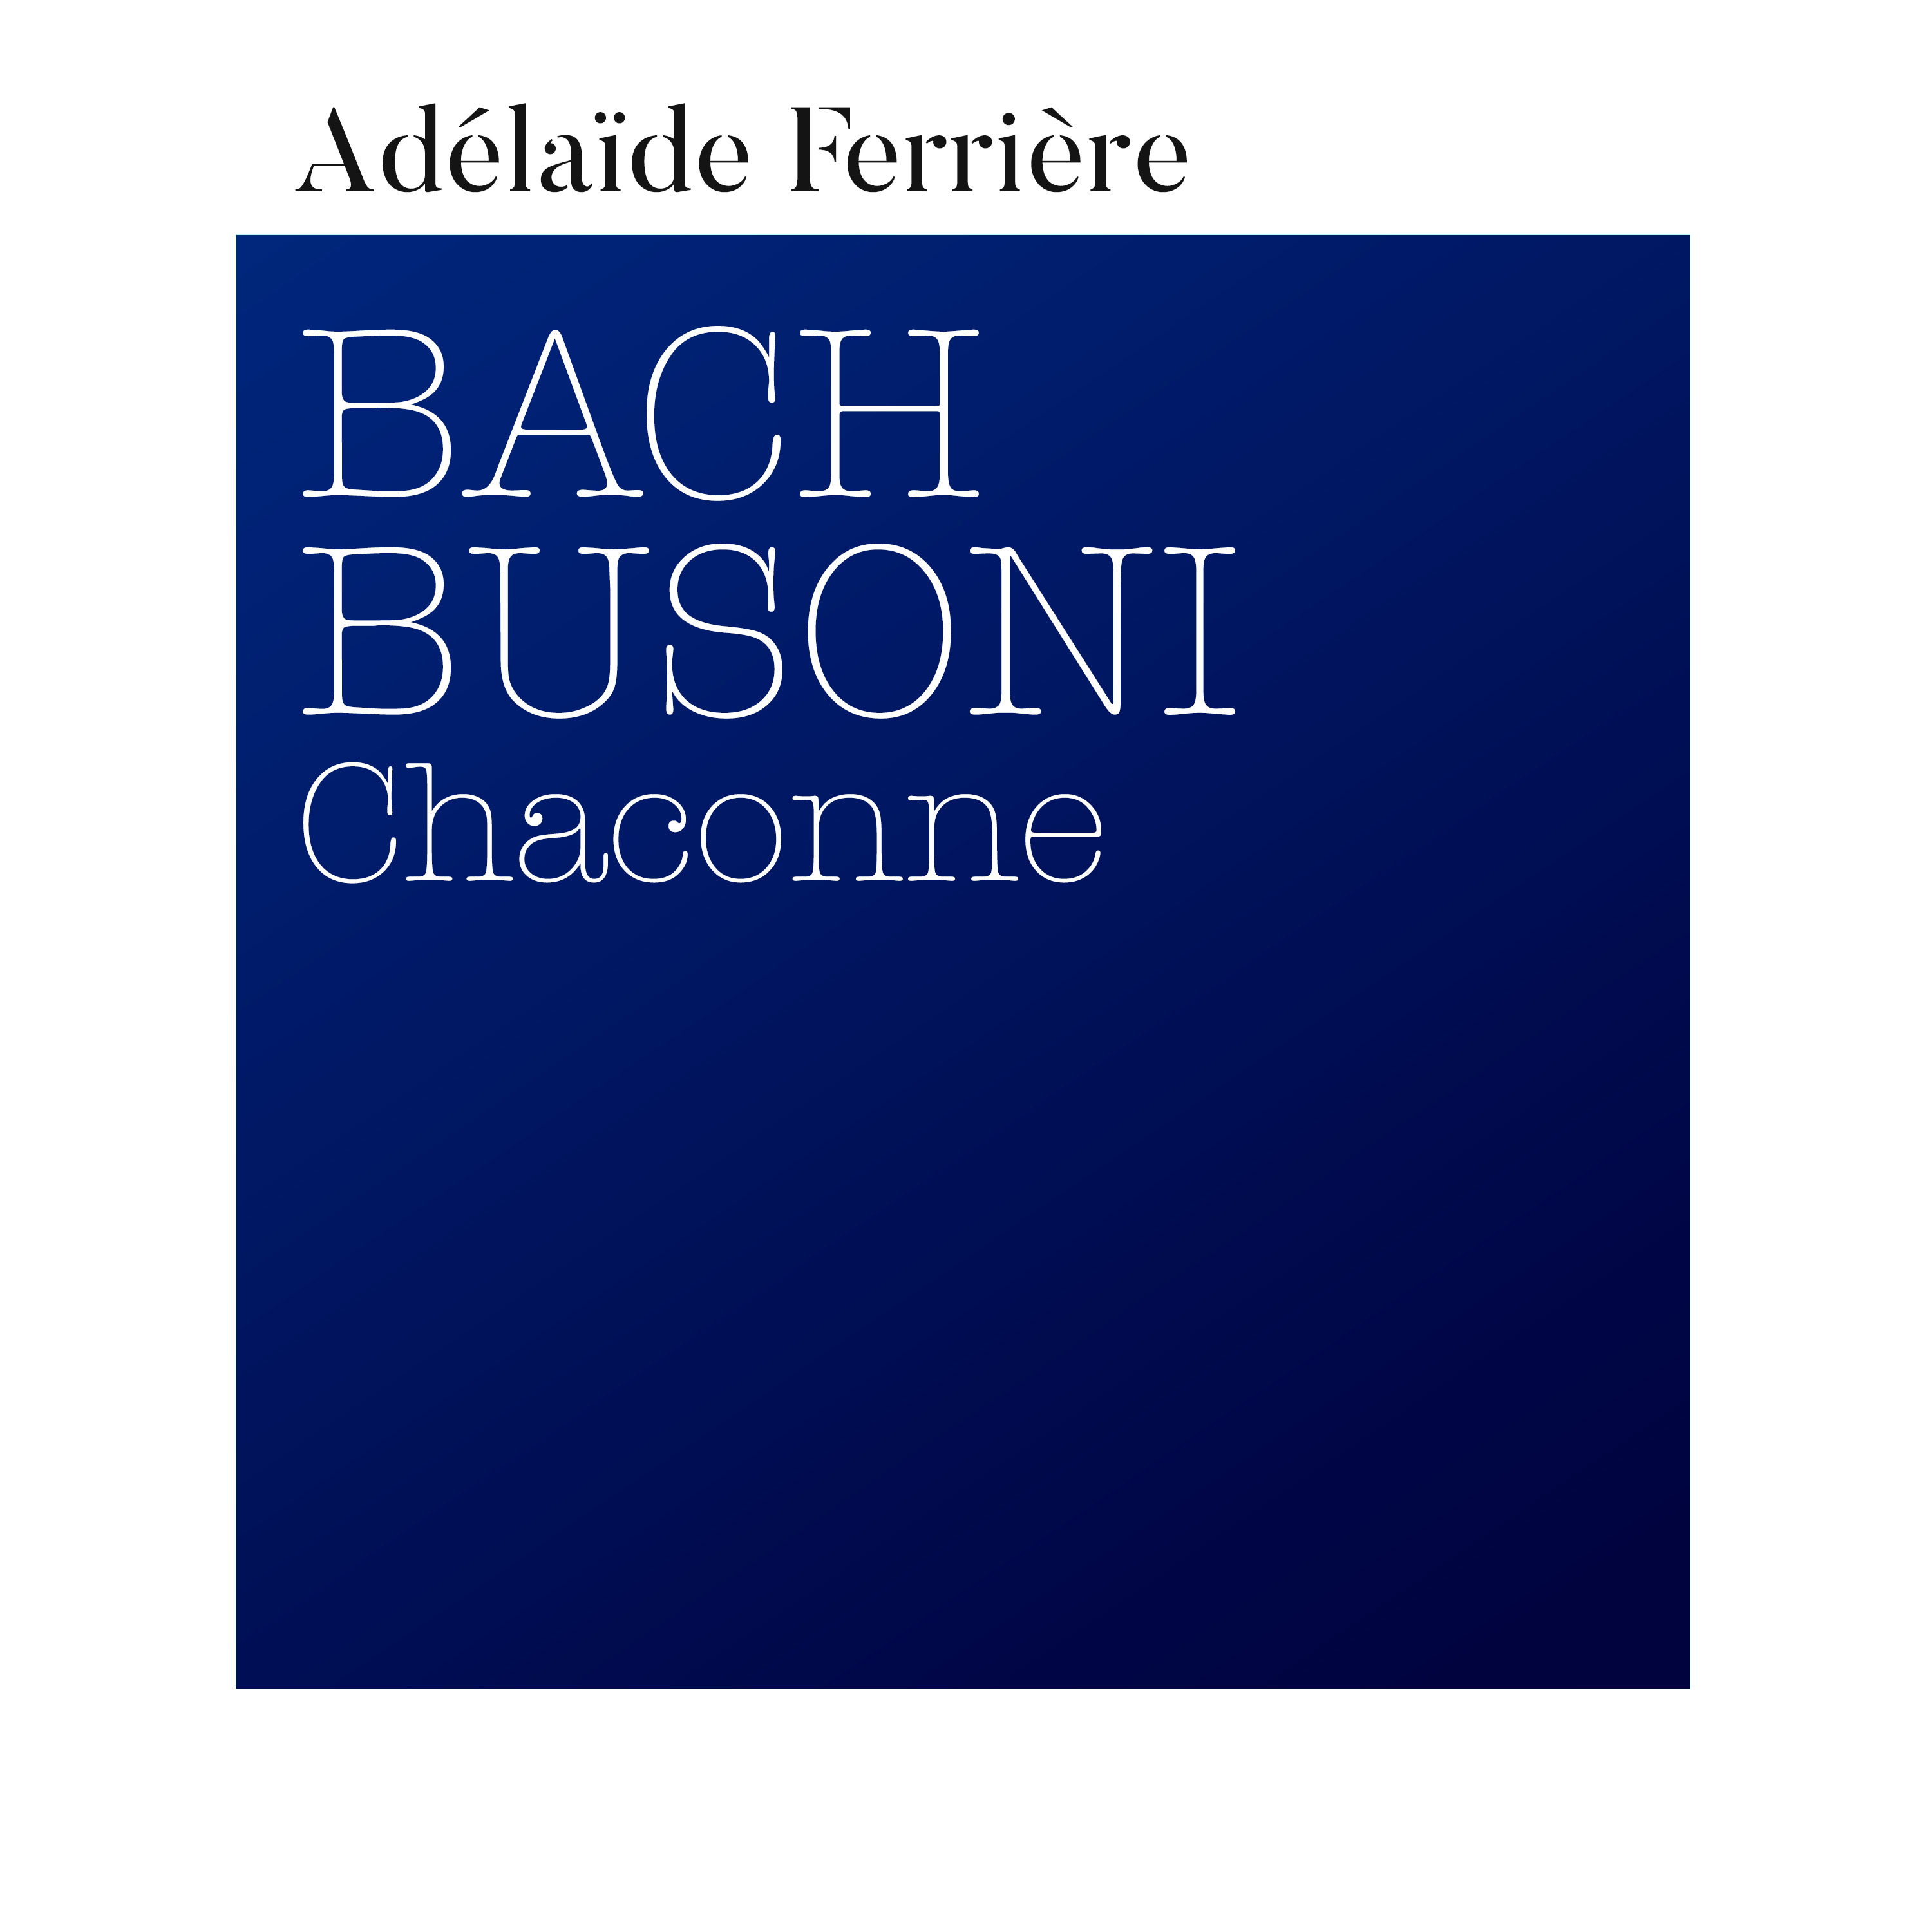 Adélaîde Ferrière - BACH/BUSONI - Chaconne